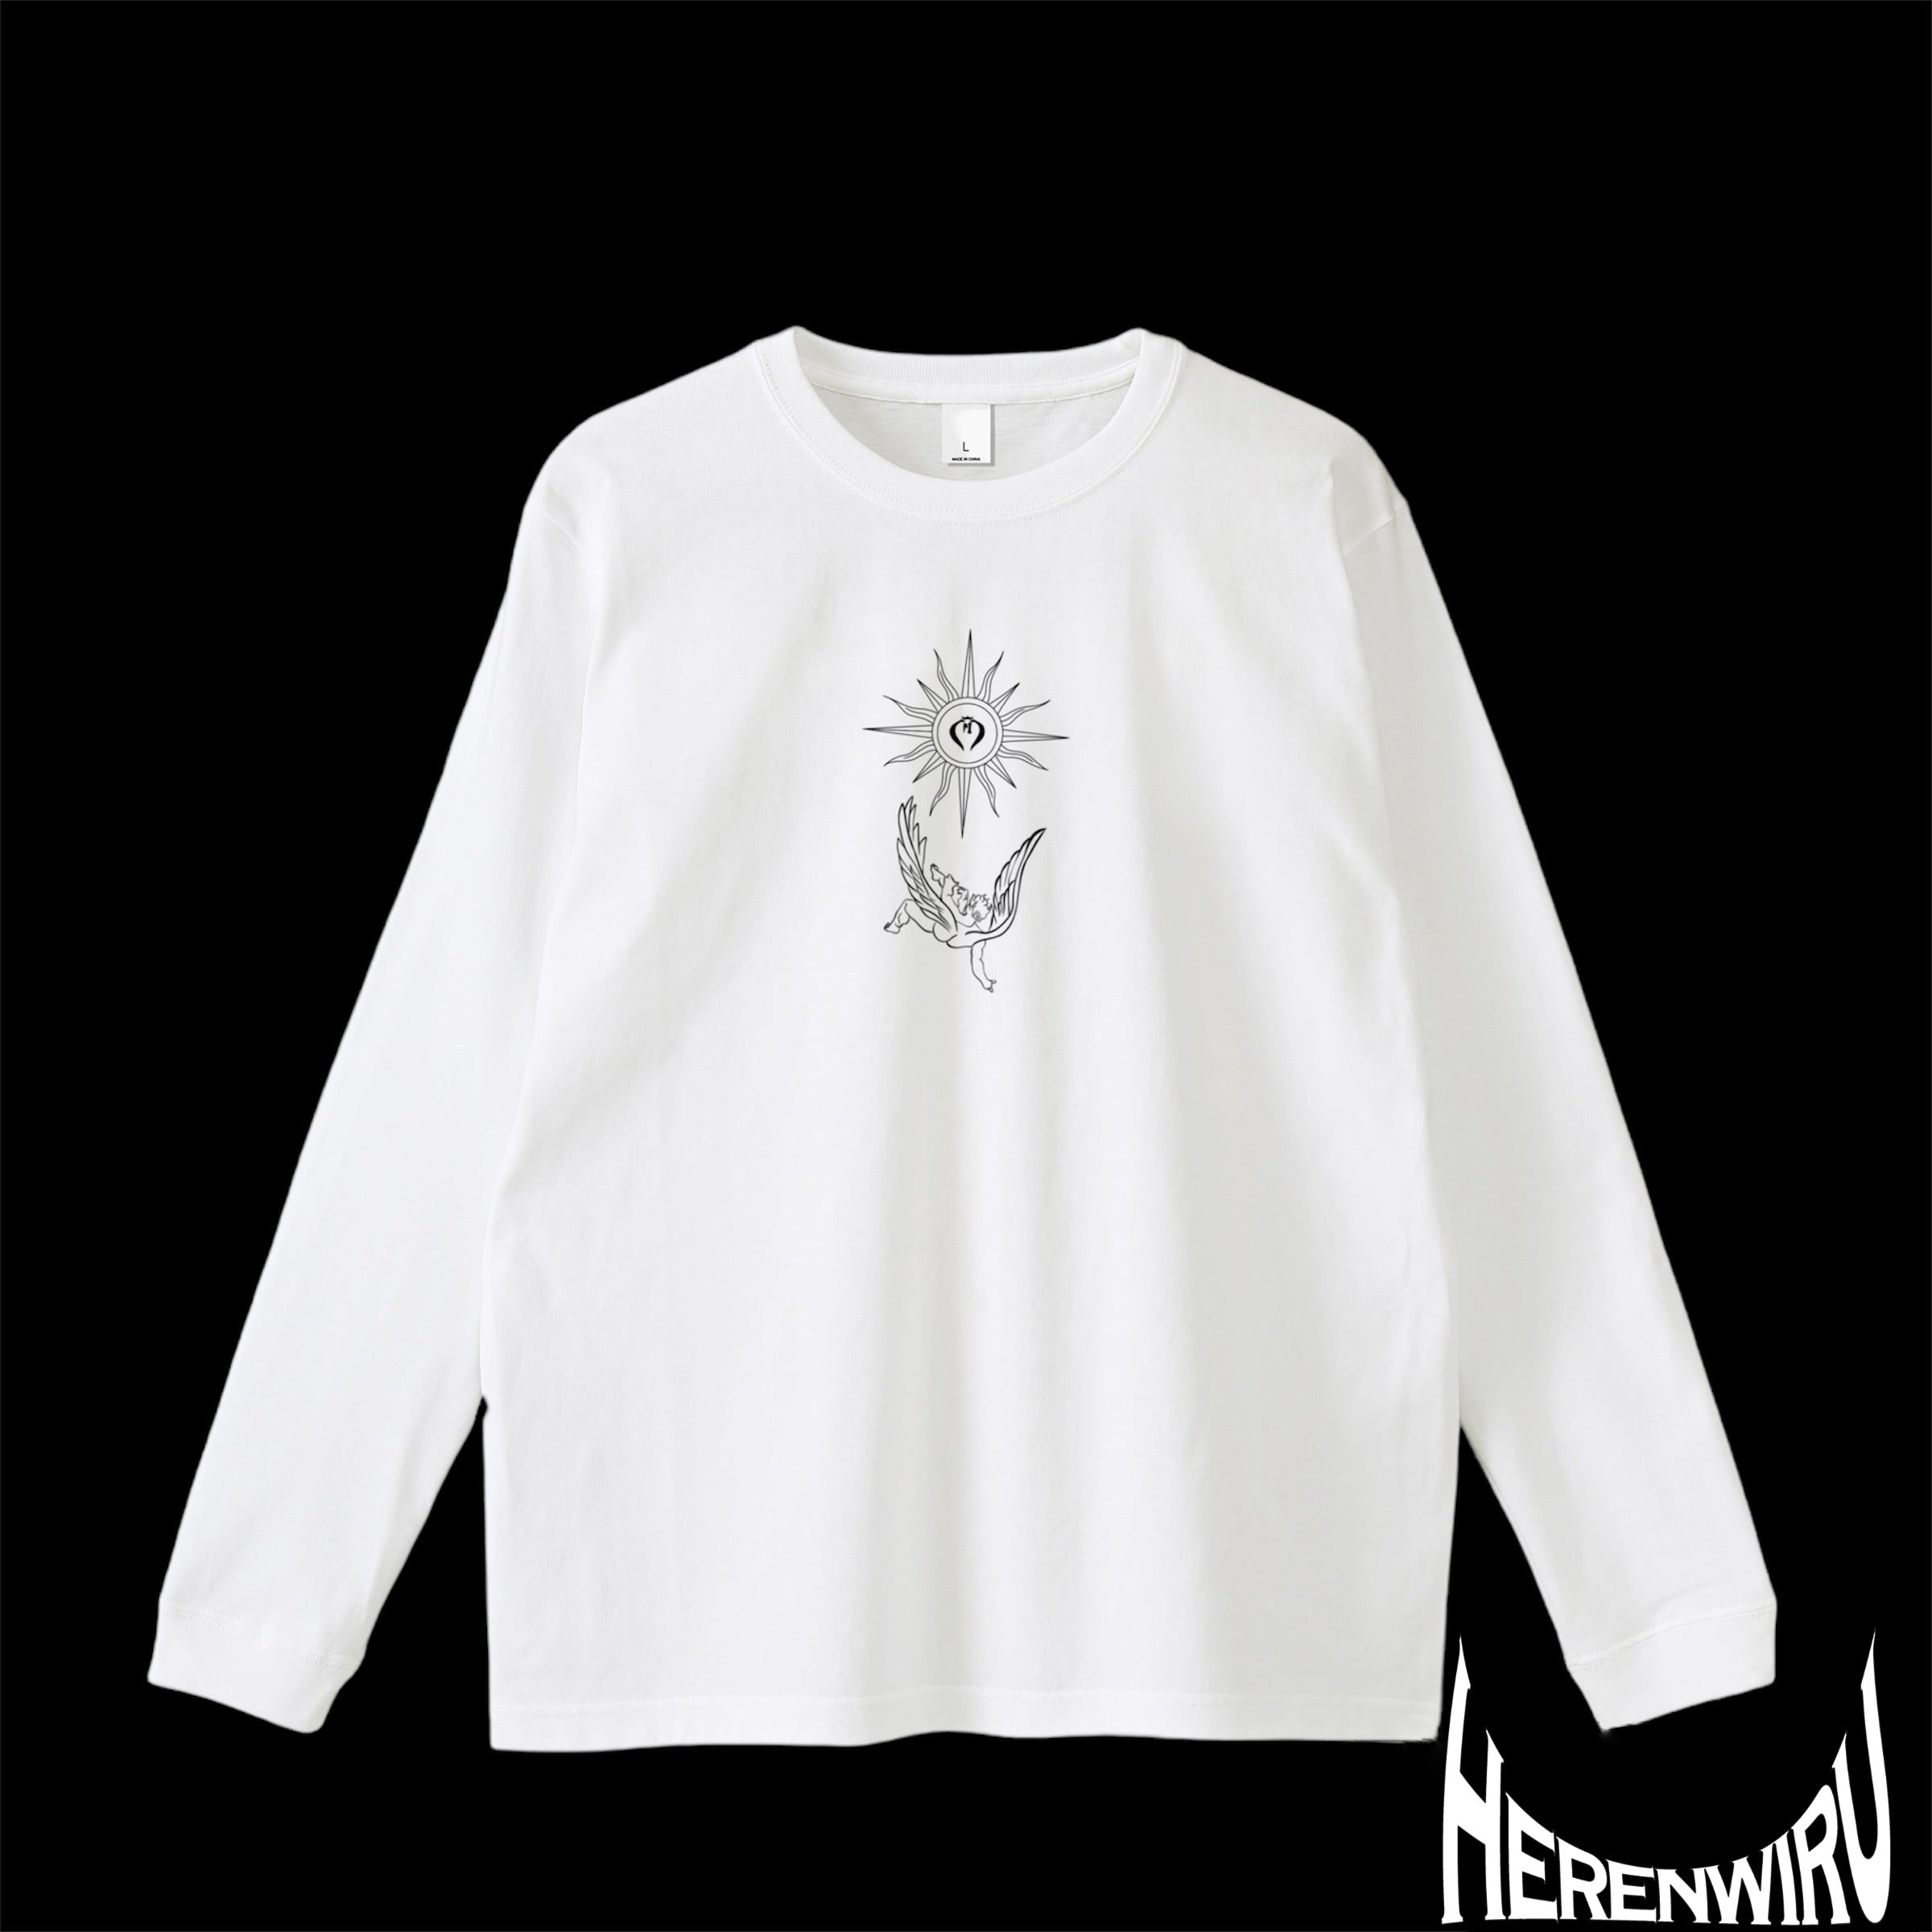 Angel&prominence White long T-shirt – Herenwiru